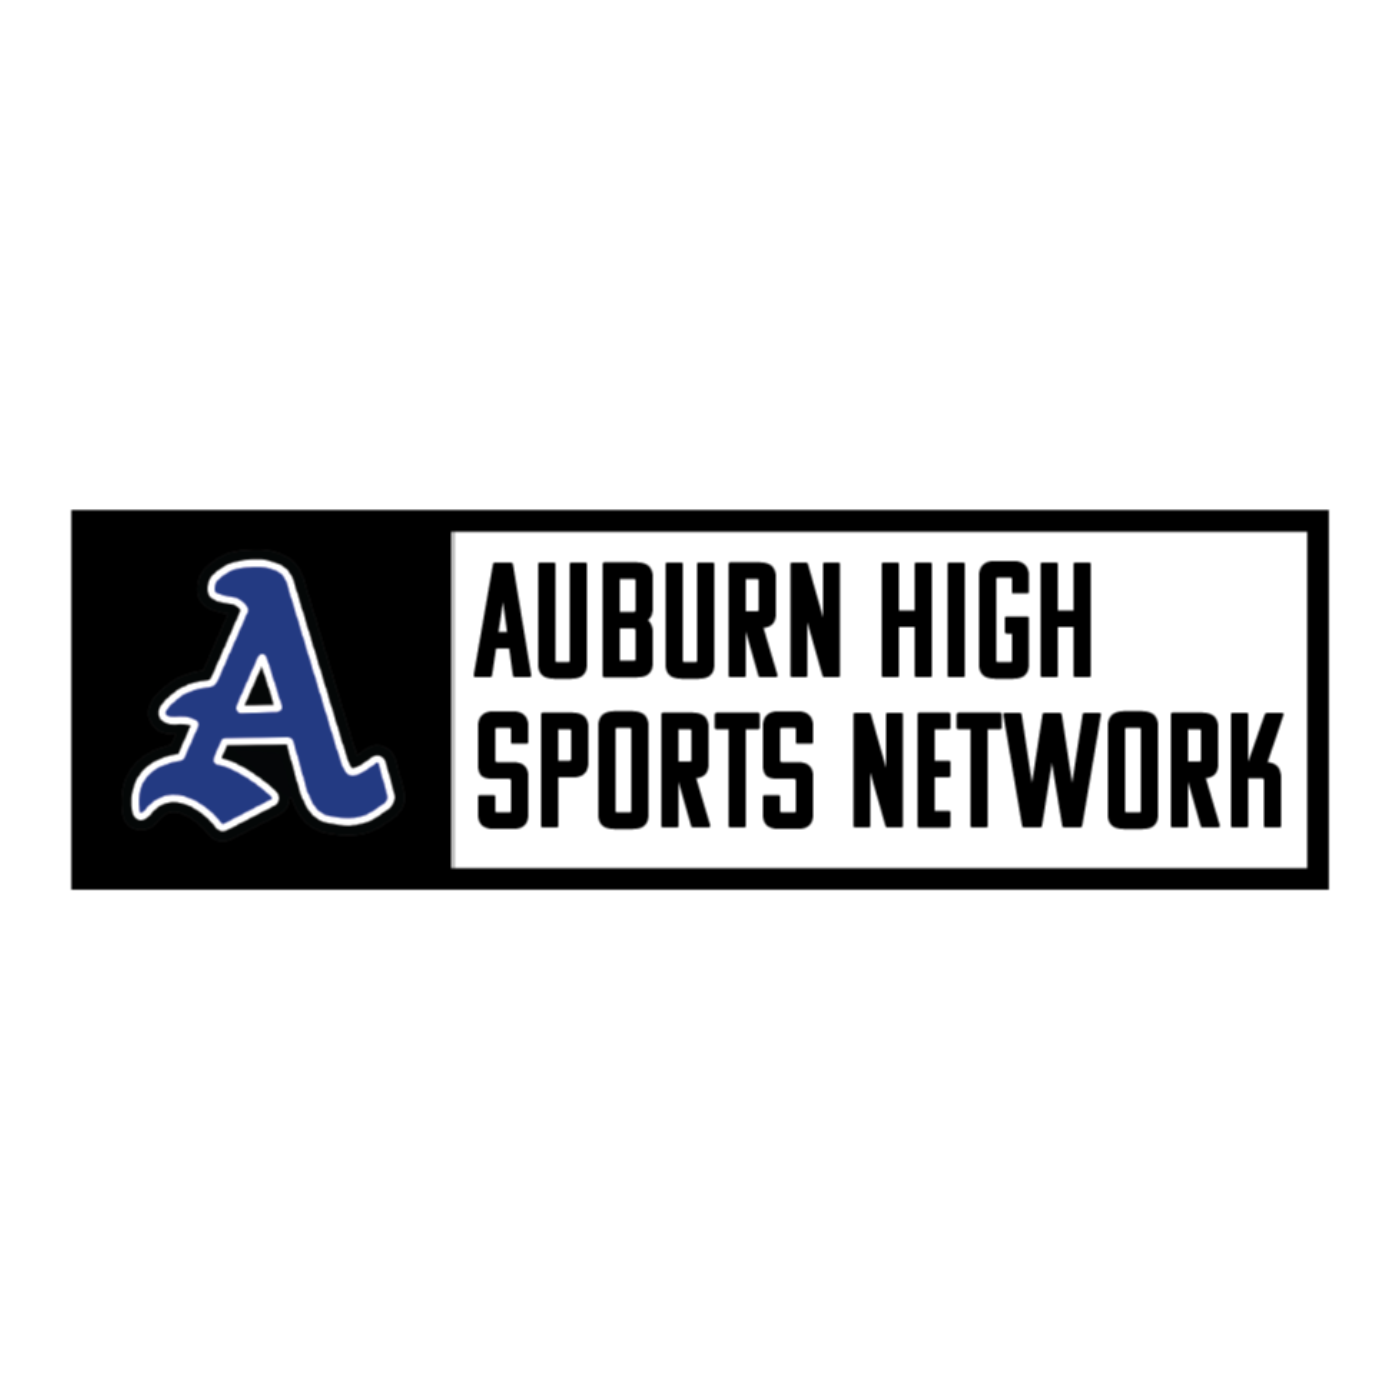 (Football) Auburn at Opelika - 08/27/21